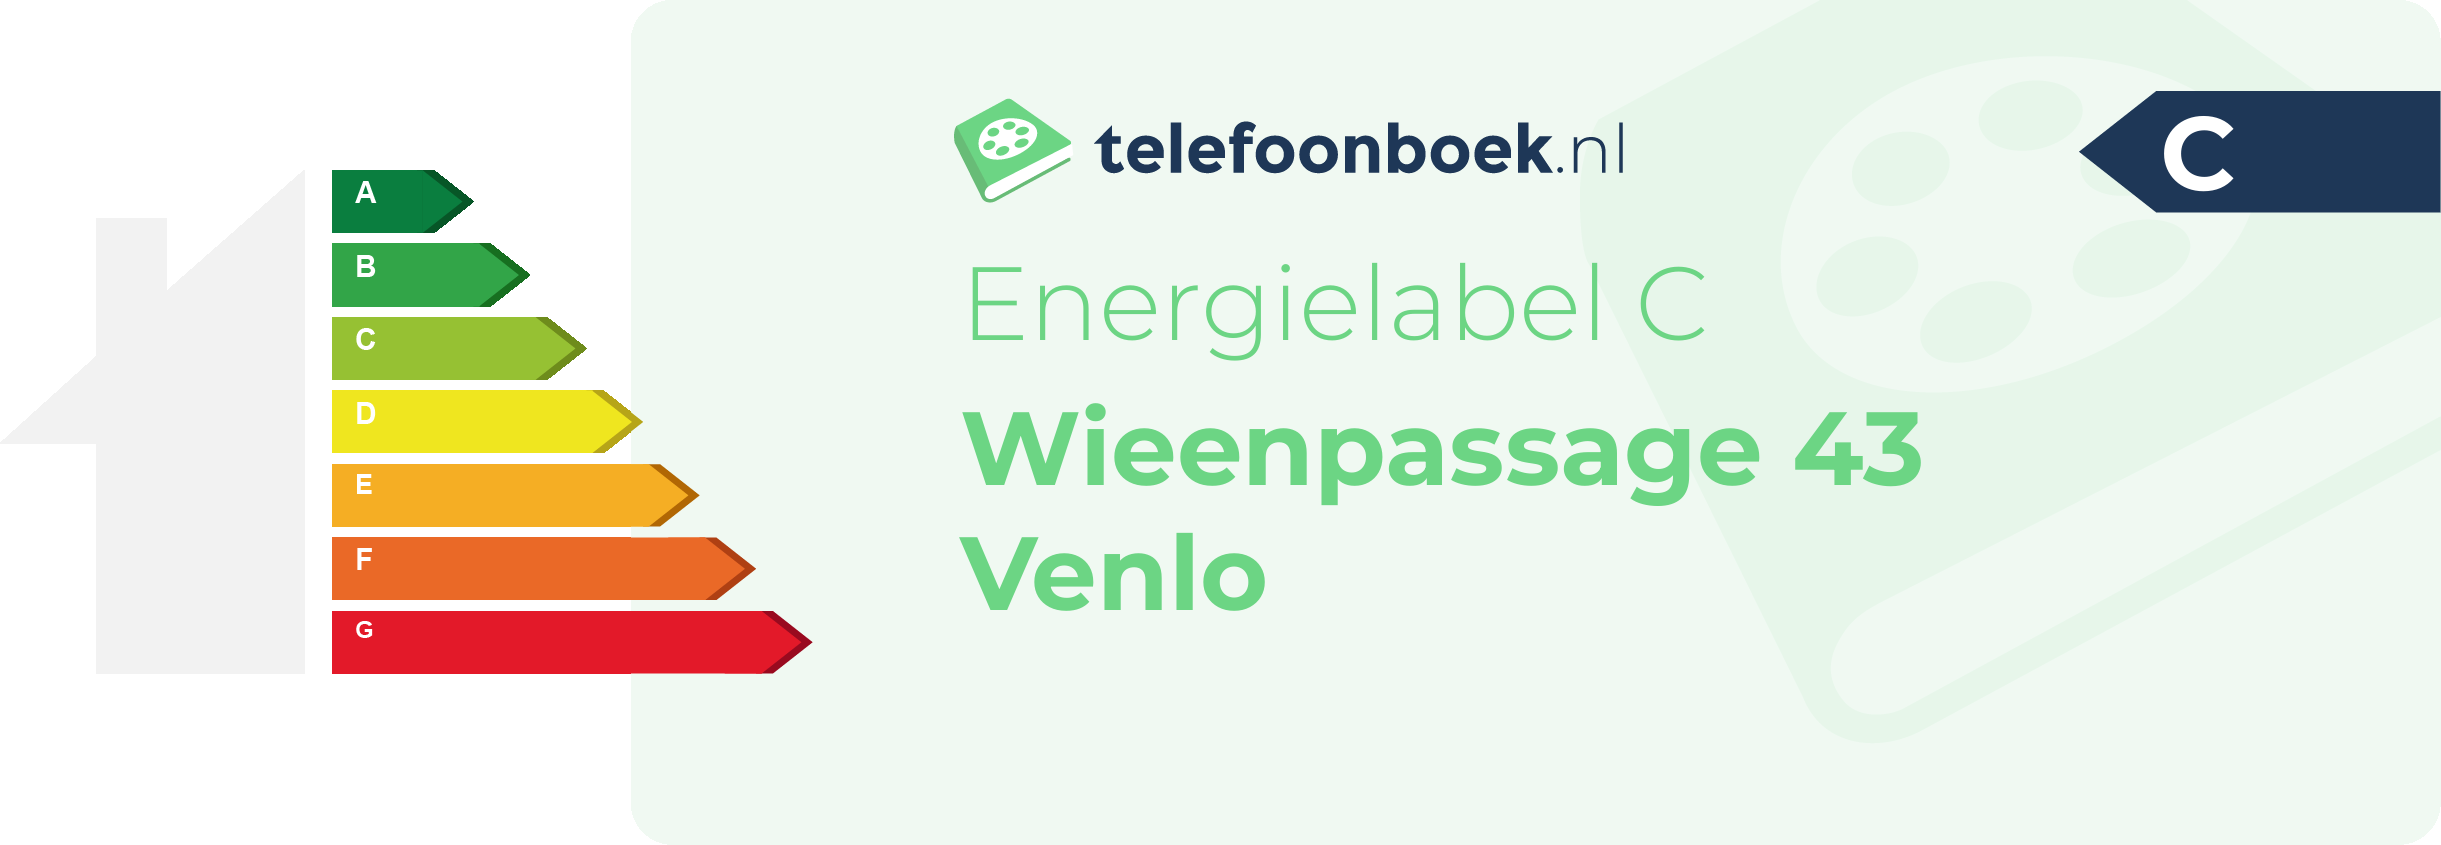 Energielabel Wieenpassage 43 Venlo